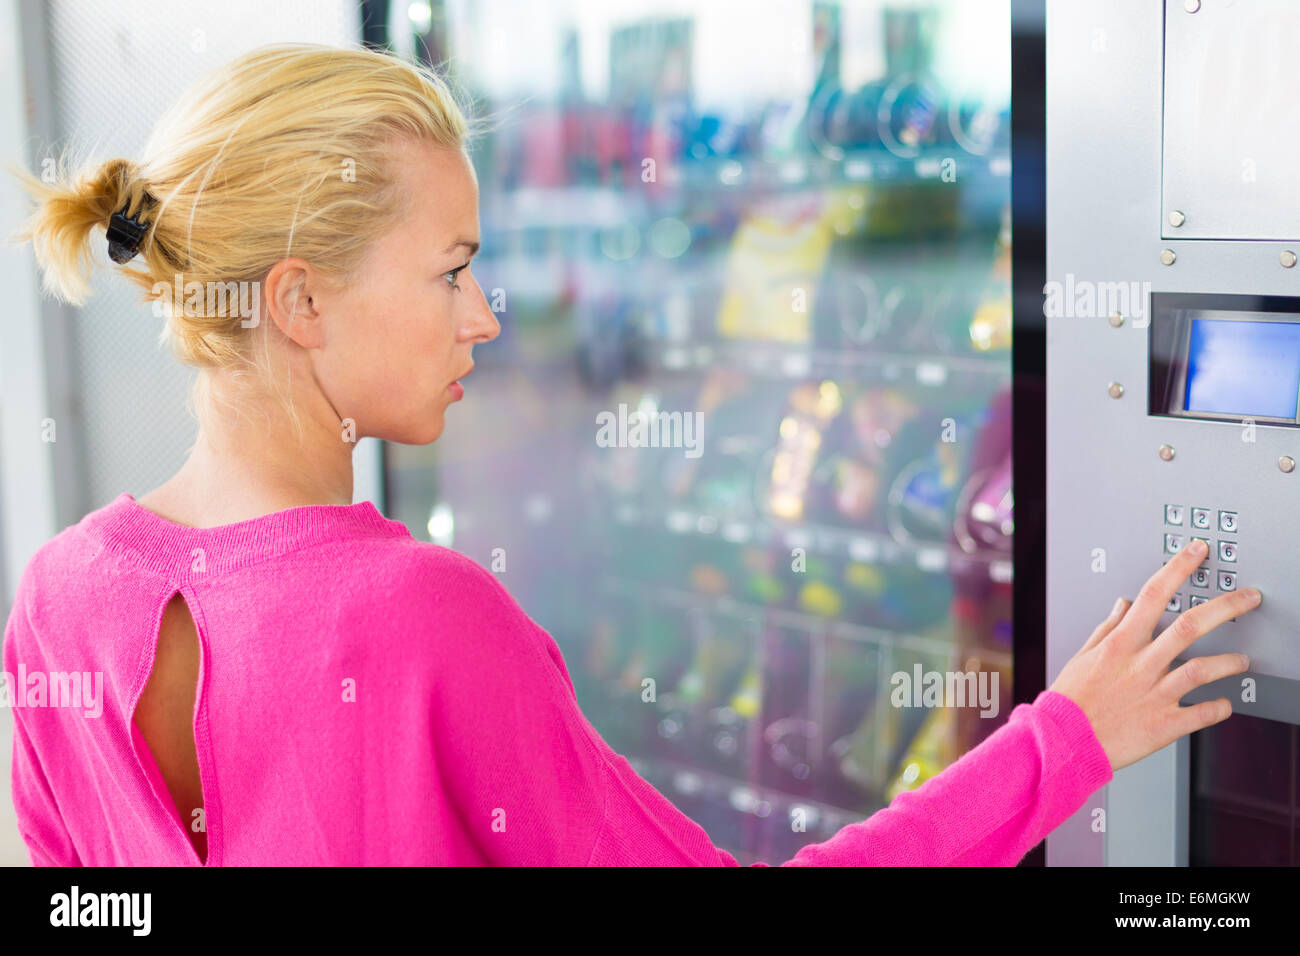 Lady using  a modern vending machine Stock Photo